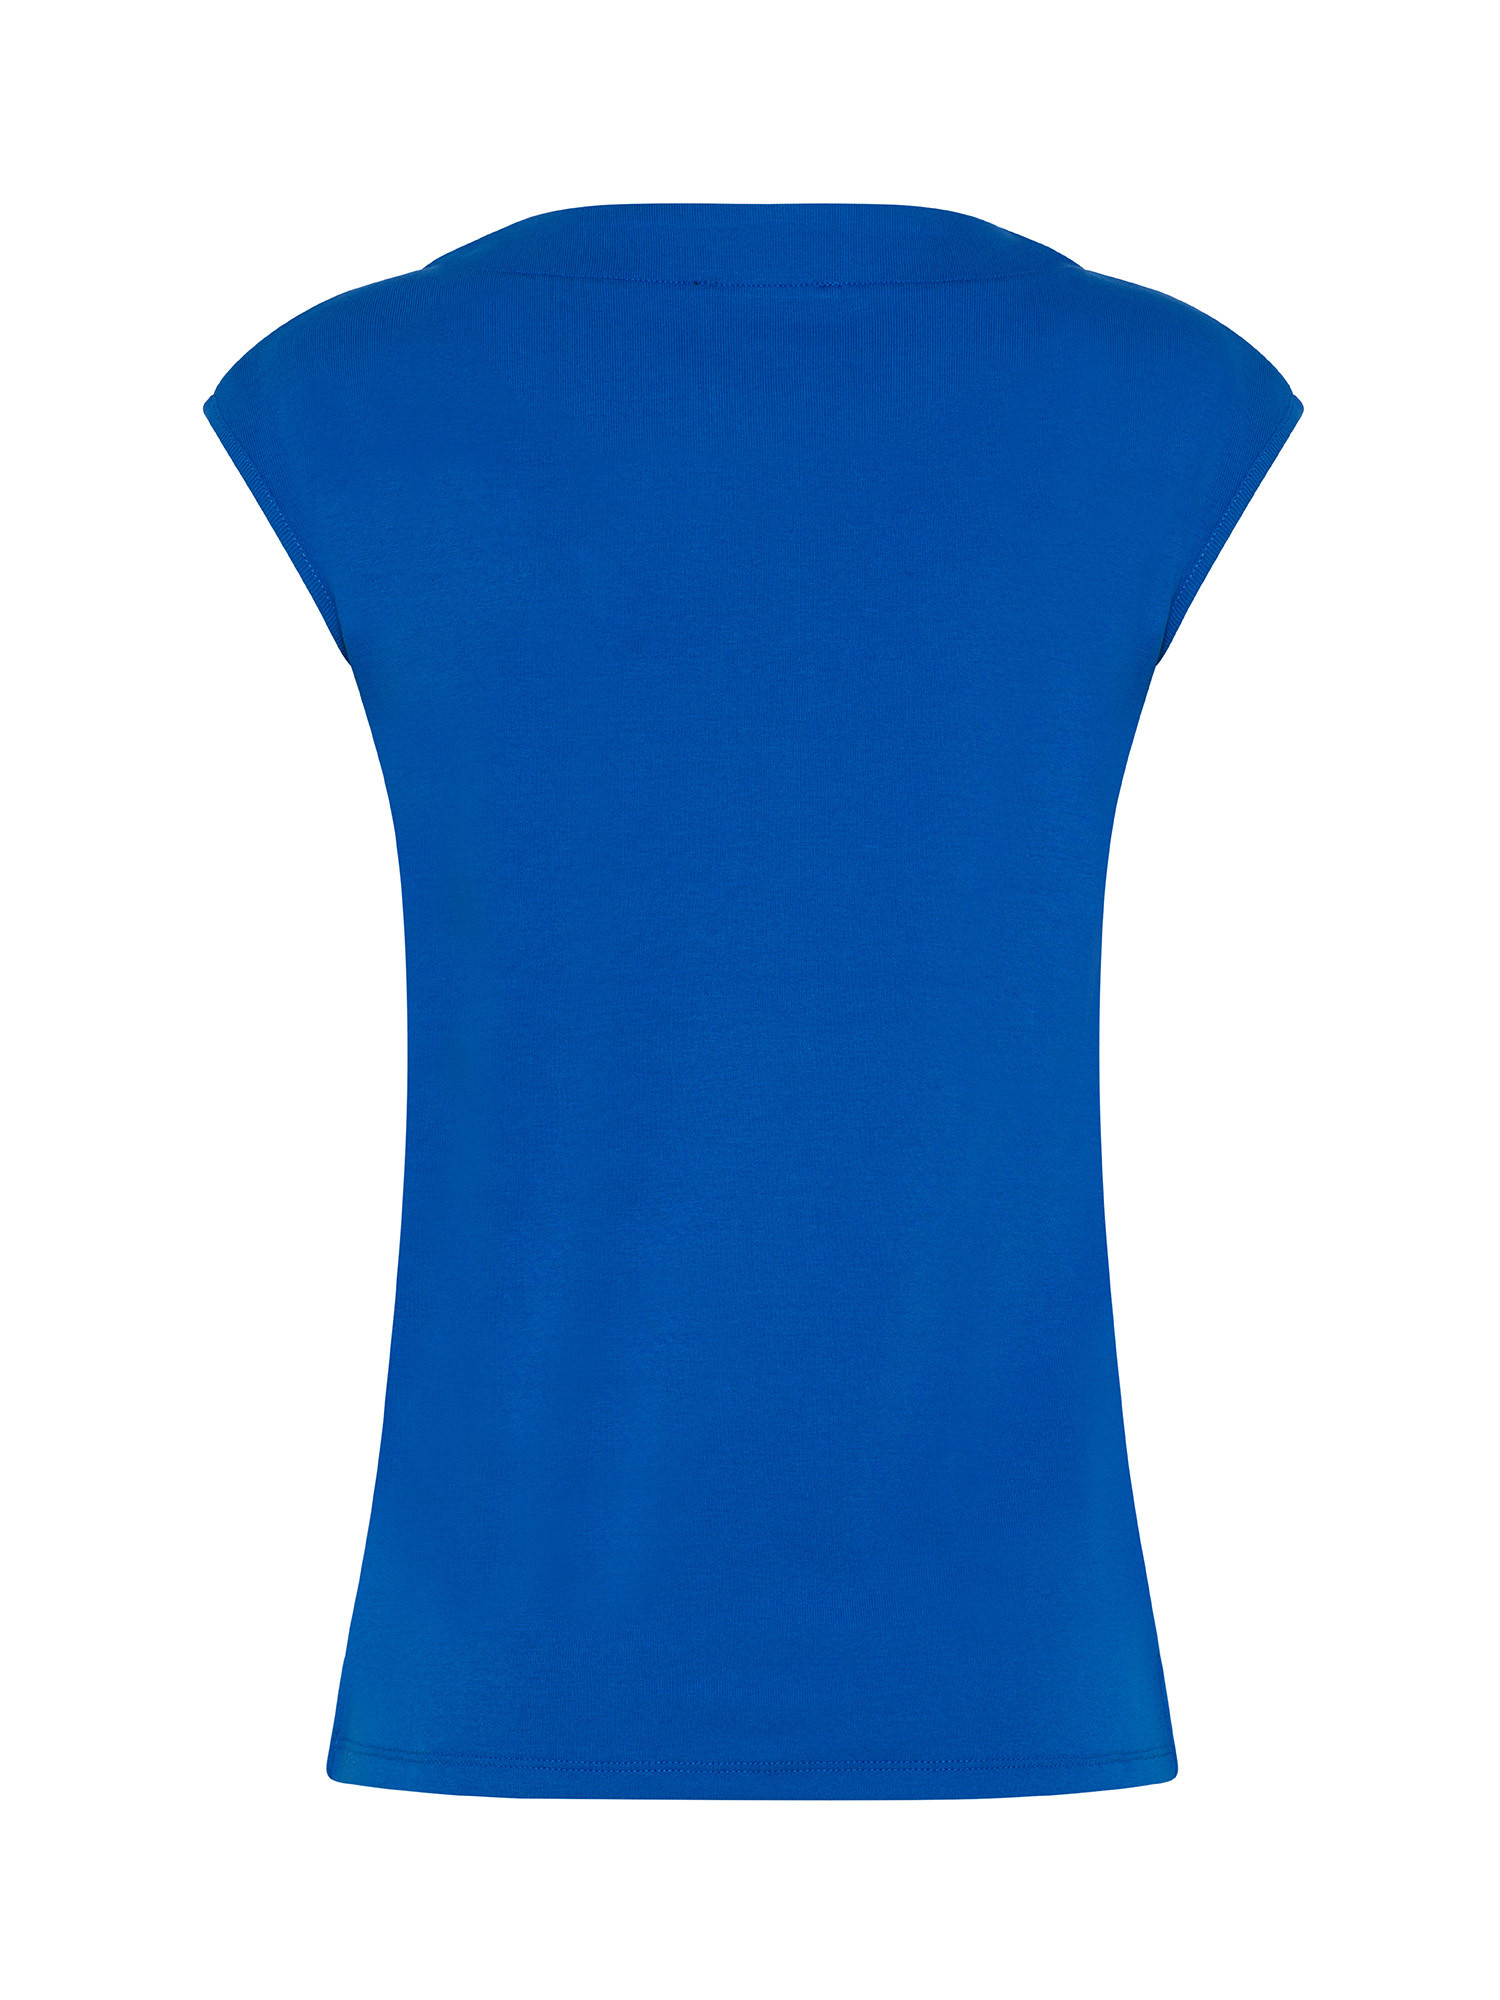 Koan - T-shirt in cotone con borchiette, Blu royal, large image number 1